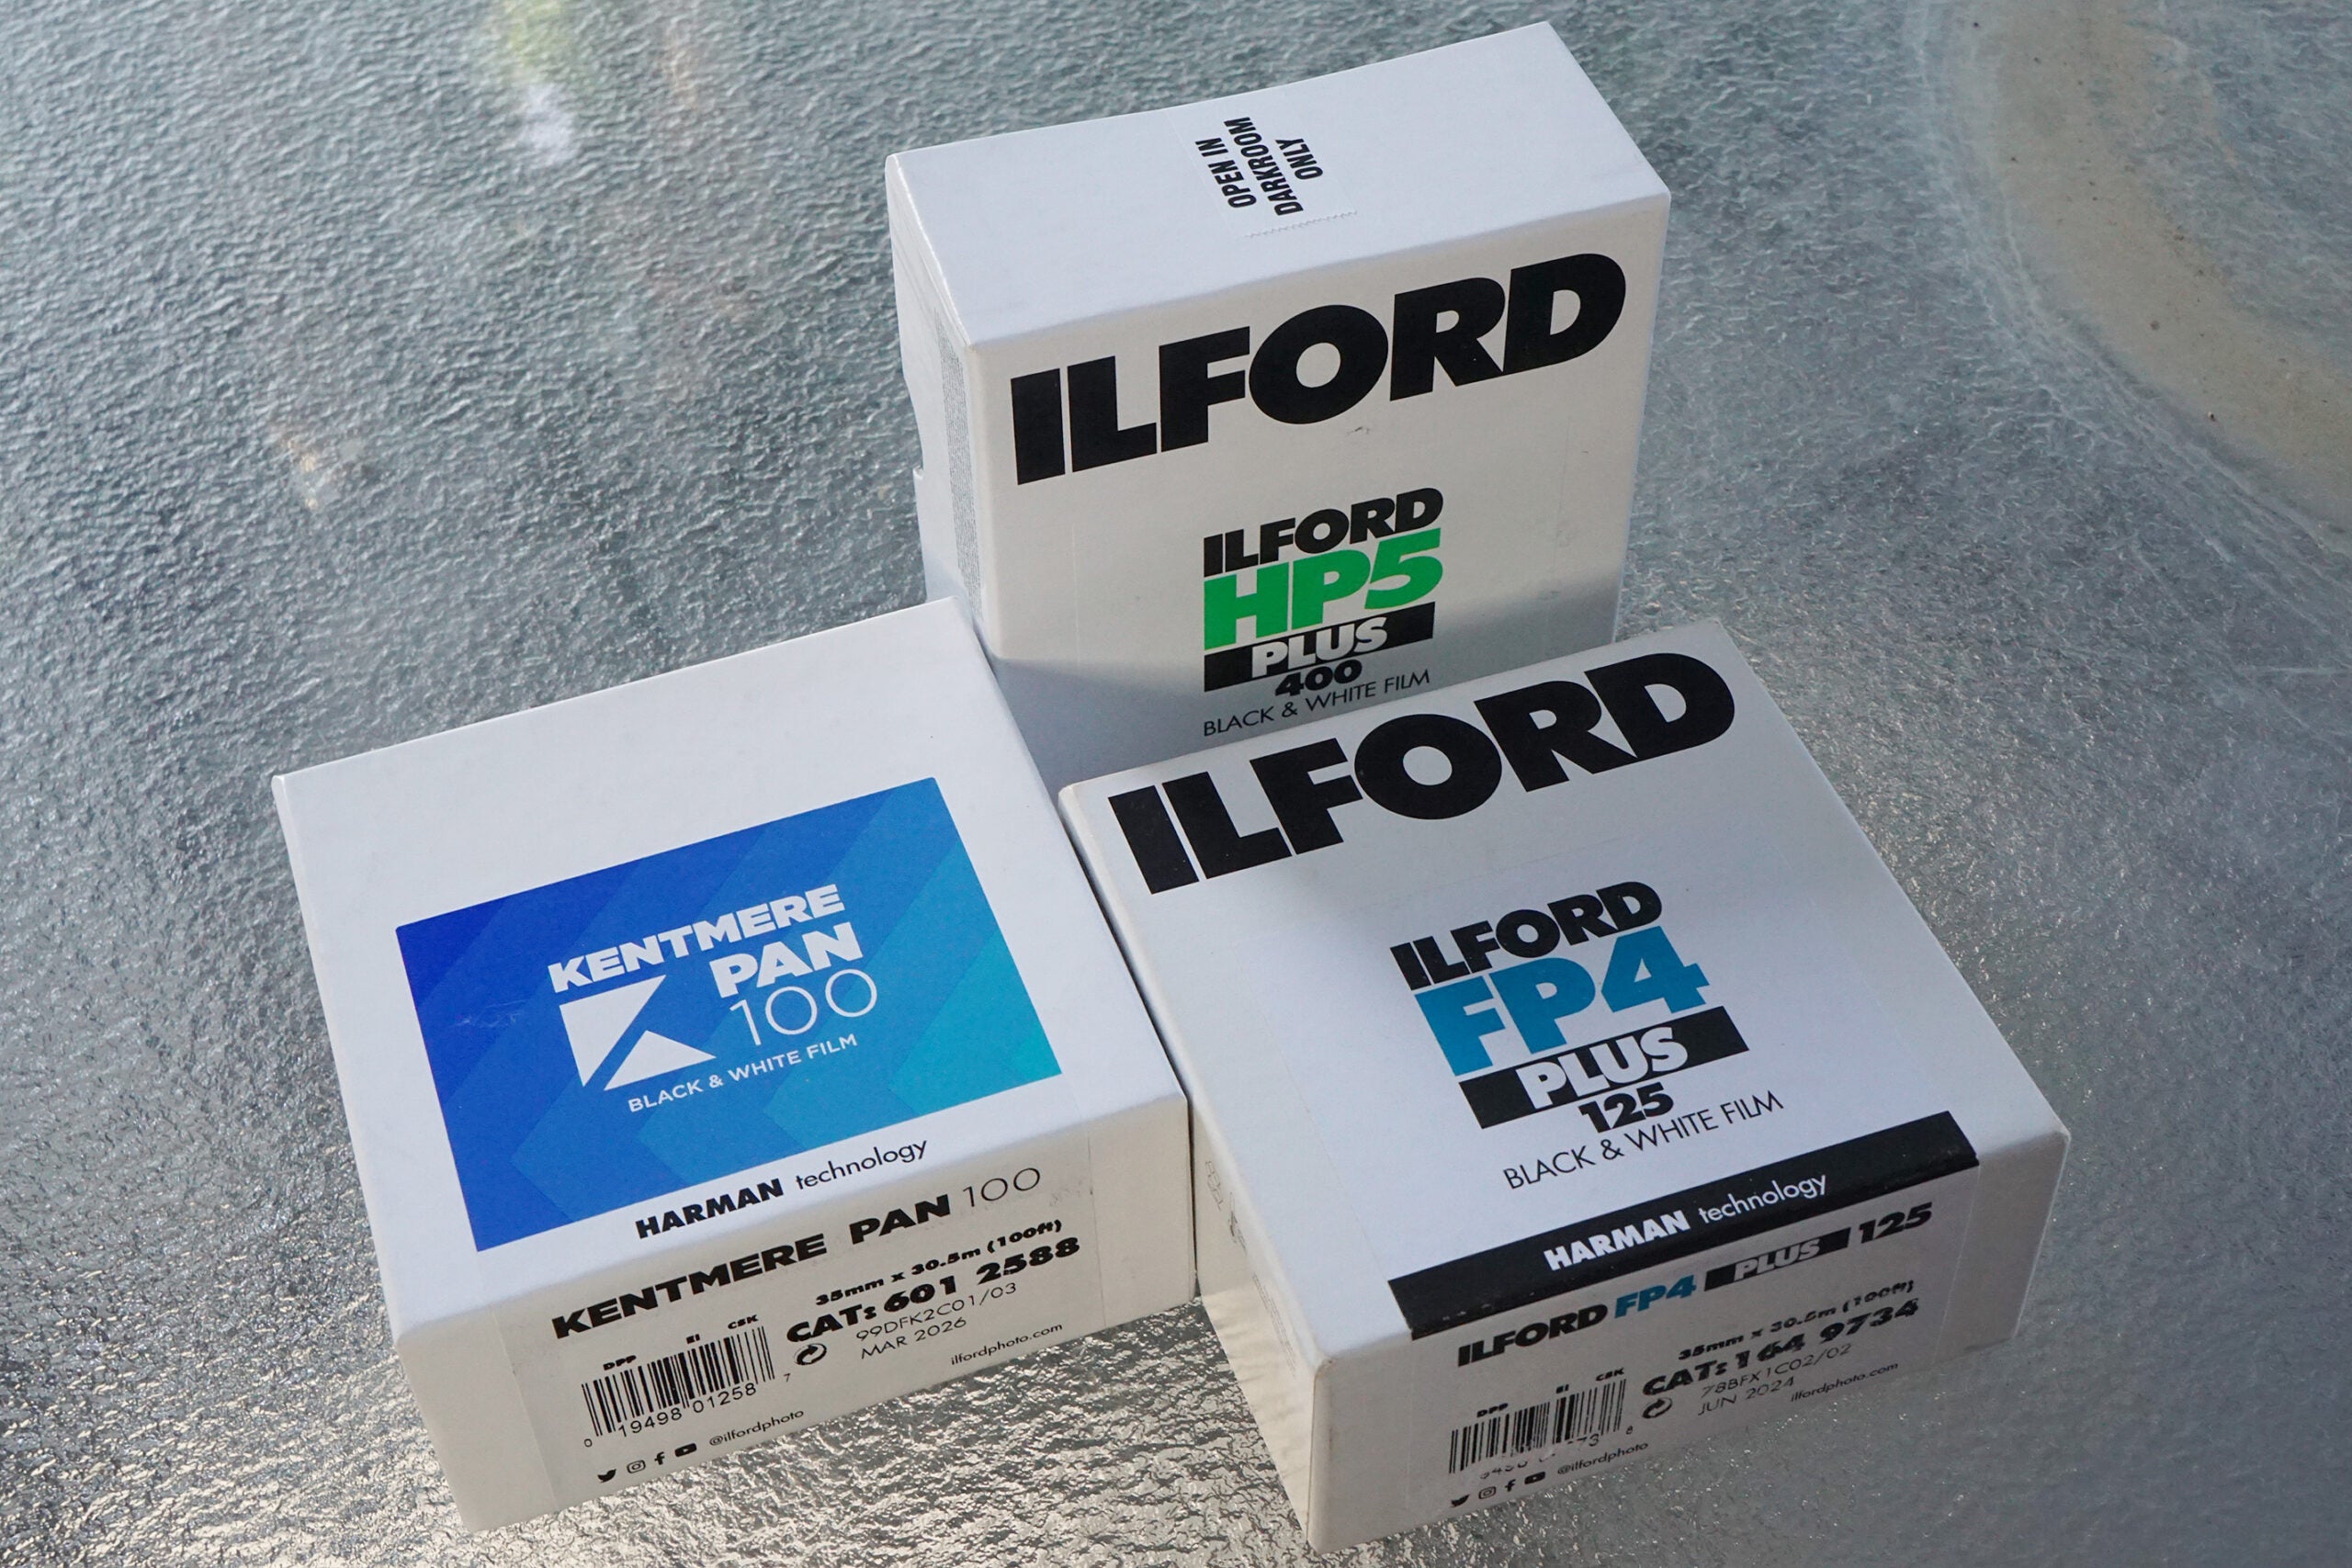 Bulk packages of 35mm film